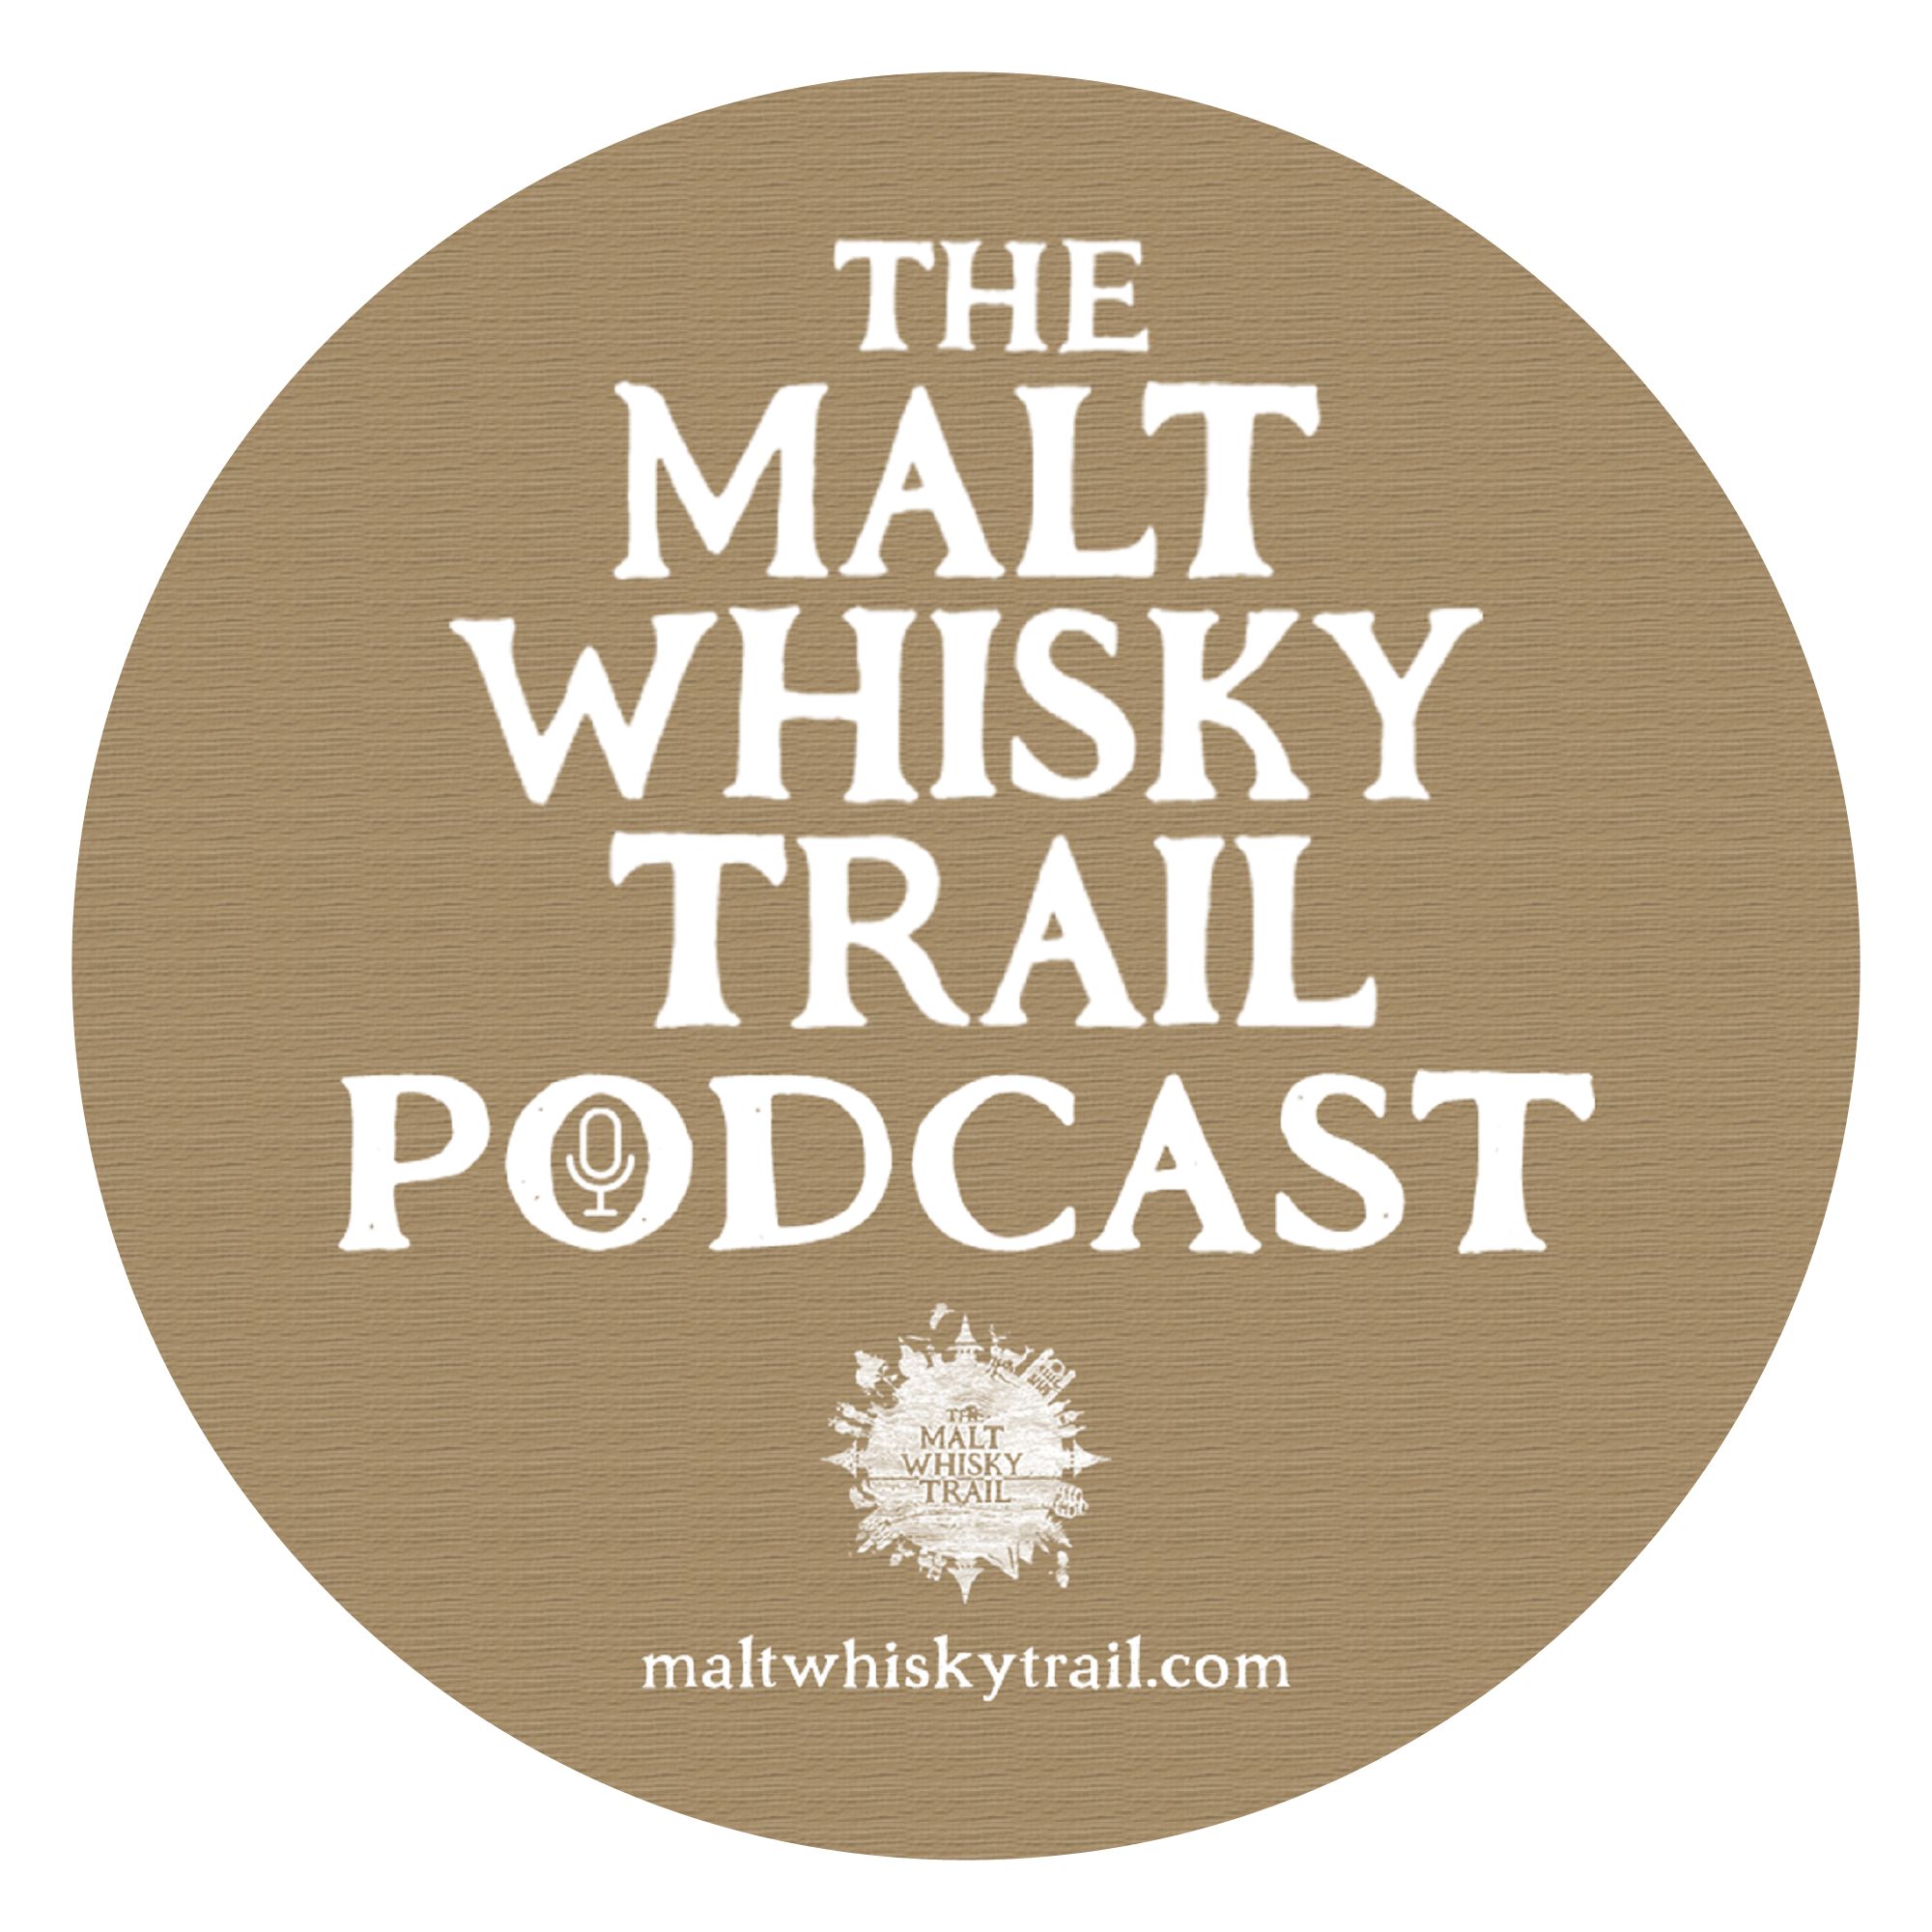 The Malt Whisky Trail Podcast